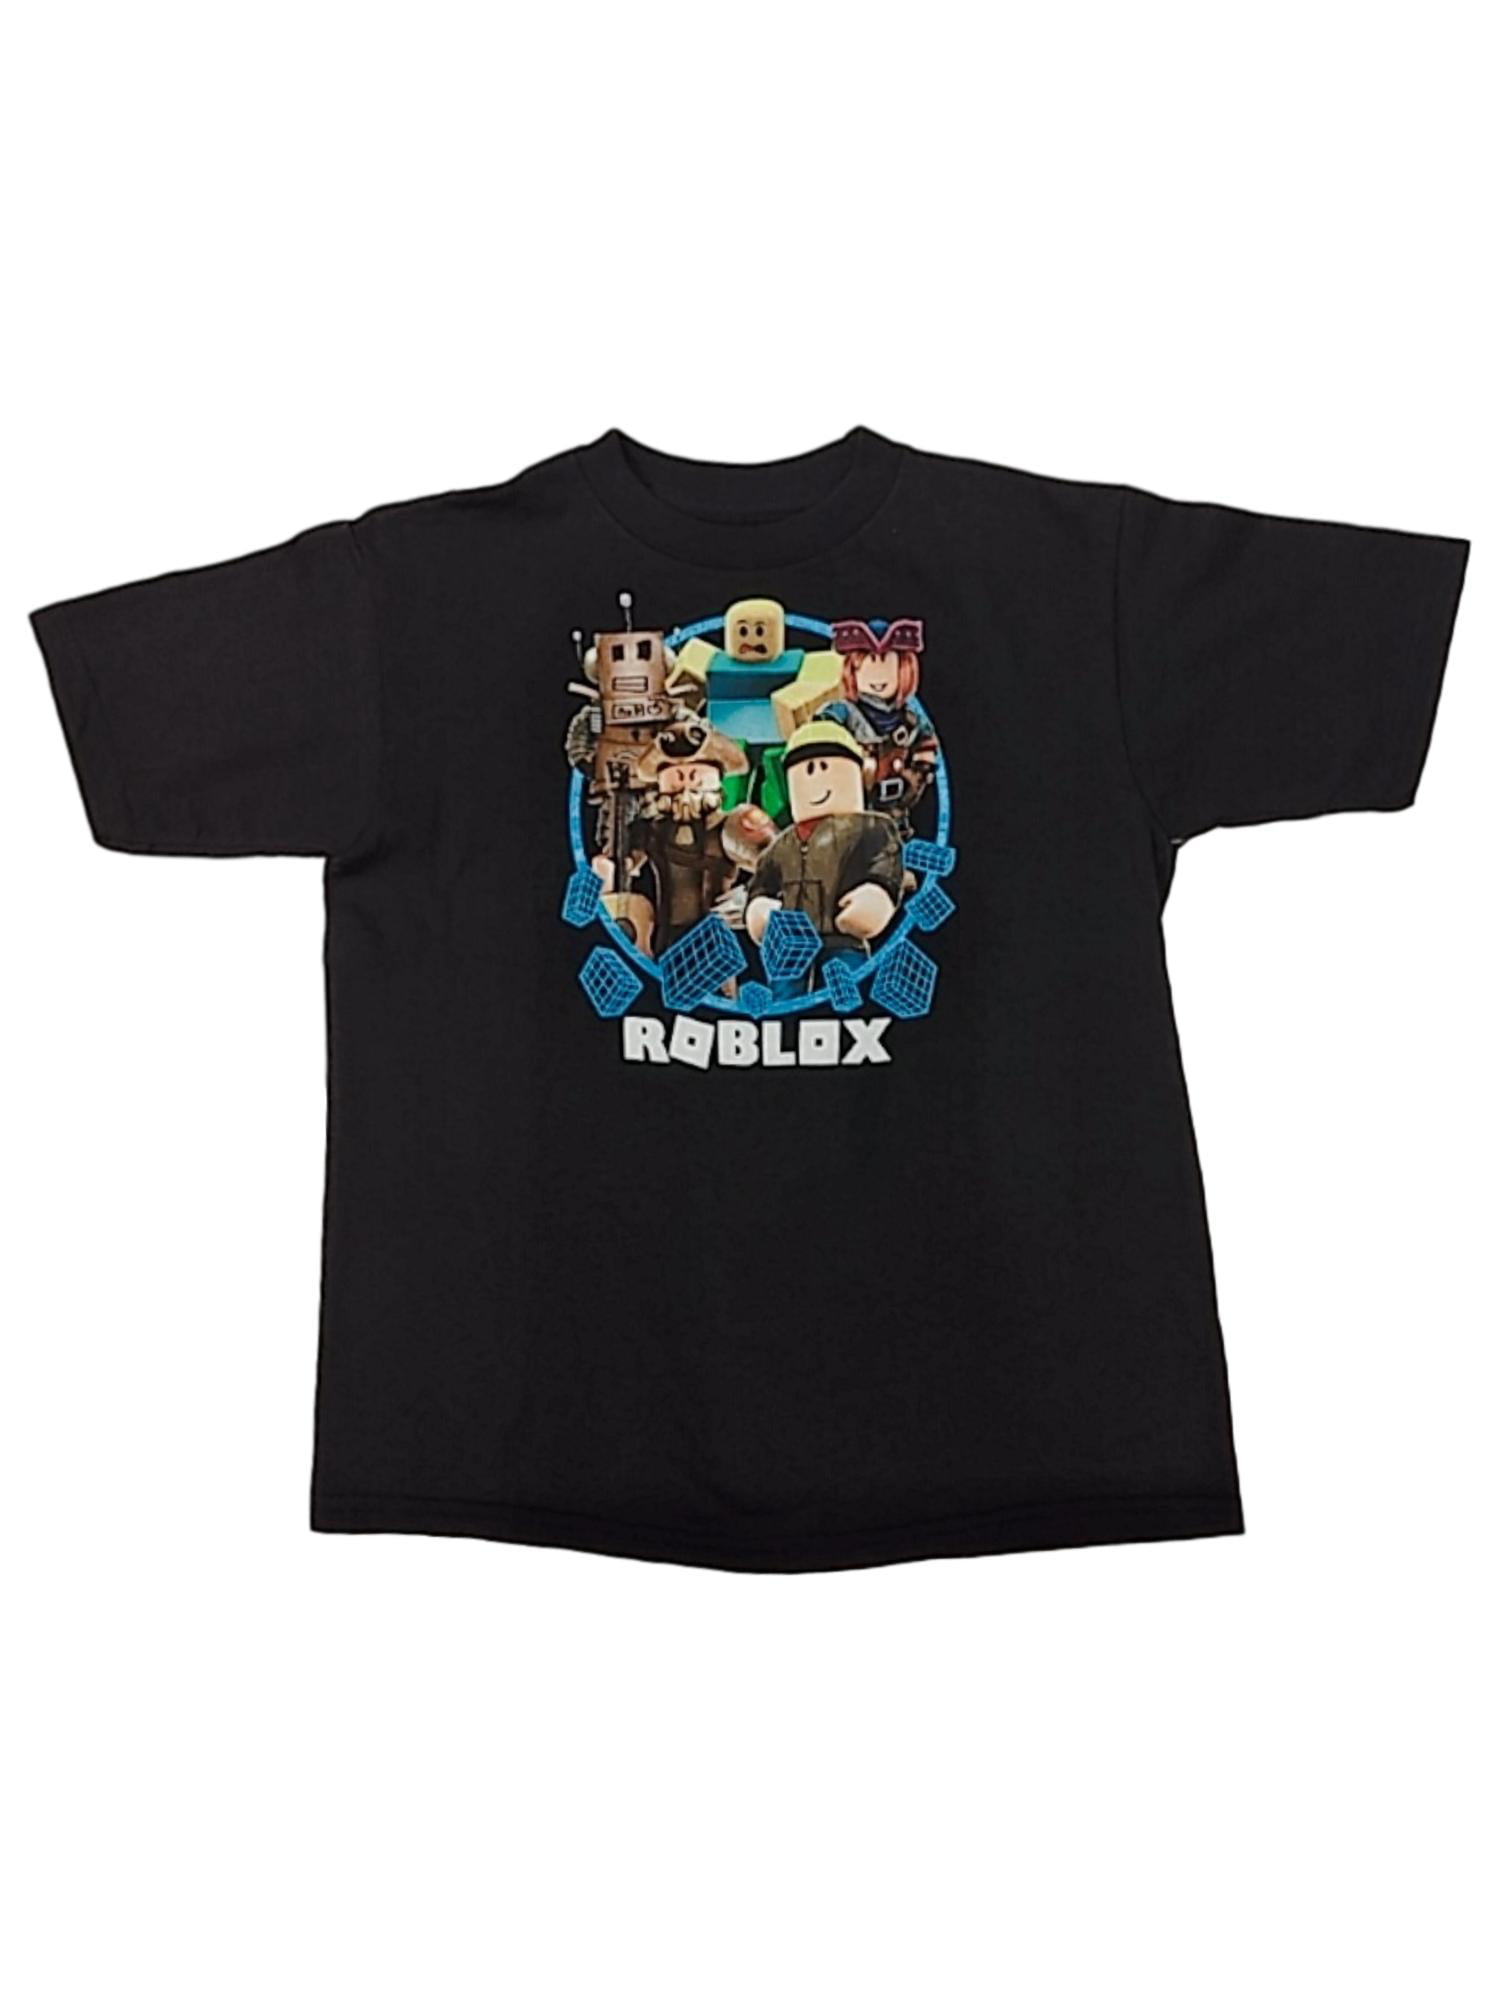 Boys Black Roblox Multi Character T Shirt Graphic Tee Shirt Large 6 7 Walmart Com Walmart Com - multi roblox